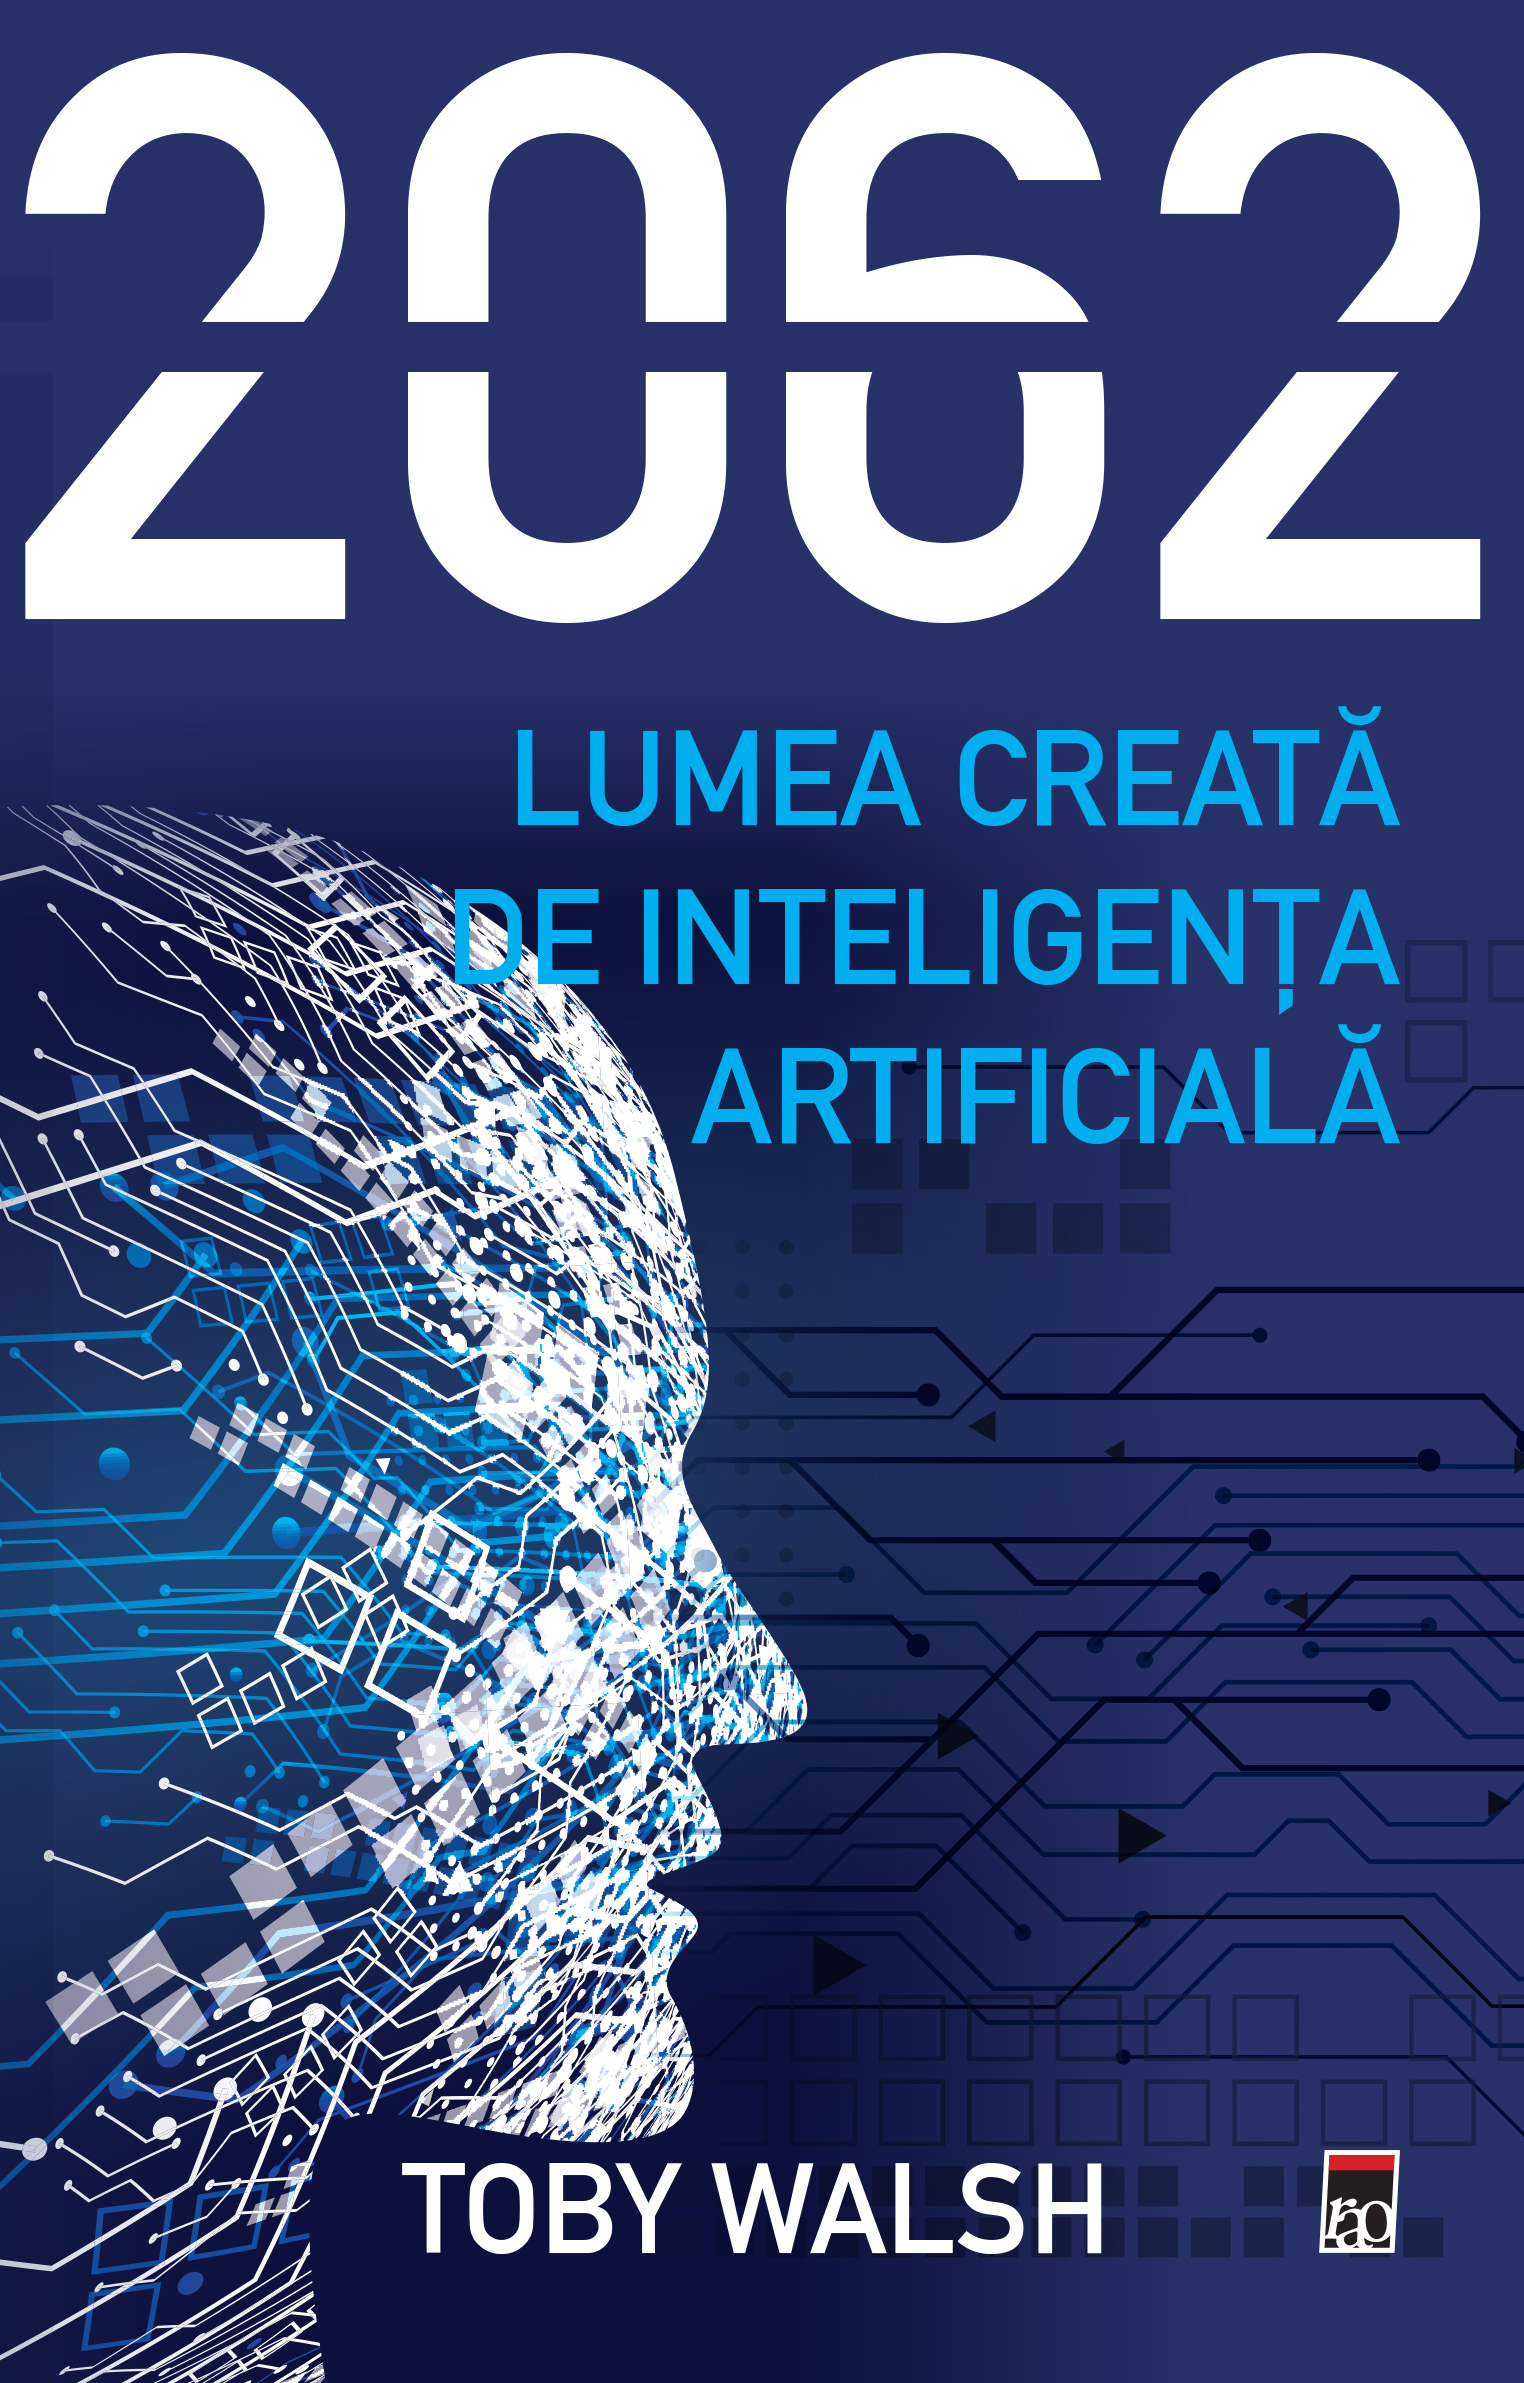 2062. Lumea creata de inteligenta artificiala | Toby Walsh 2062. imagine 2022